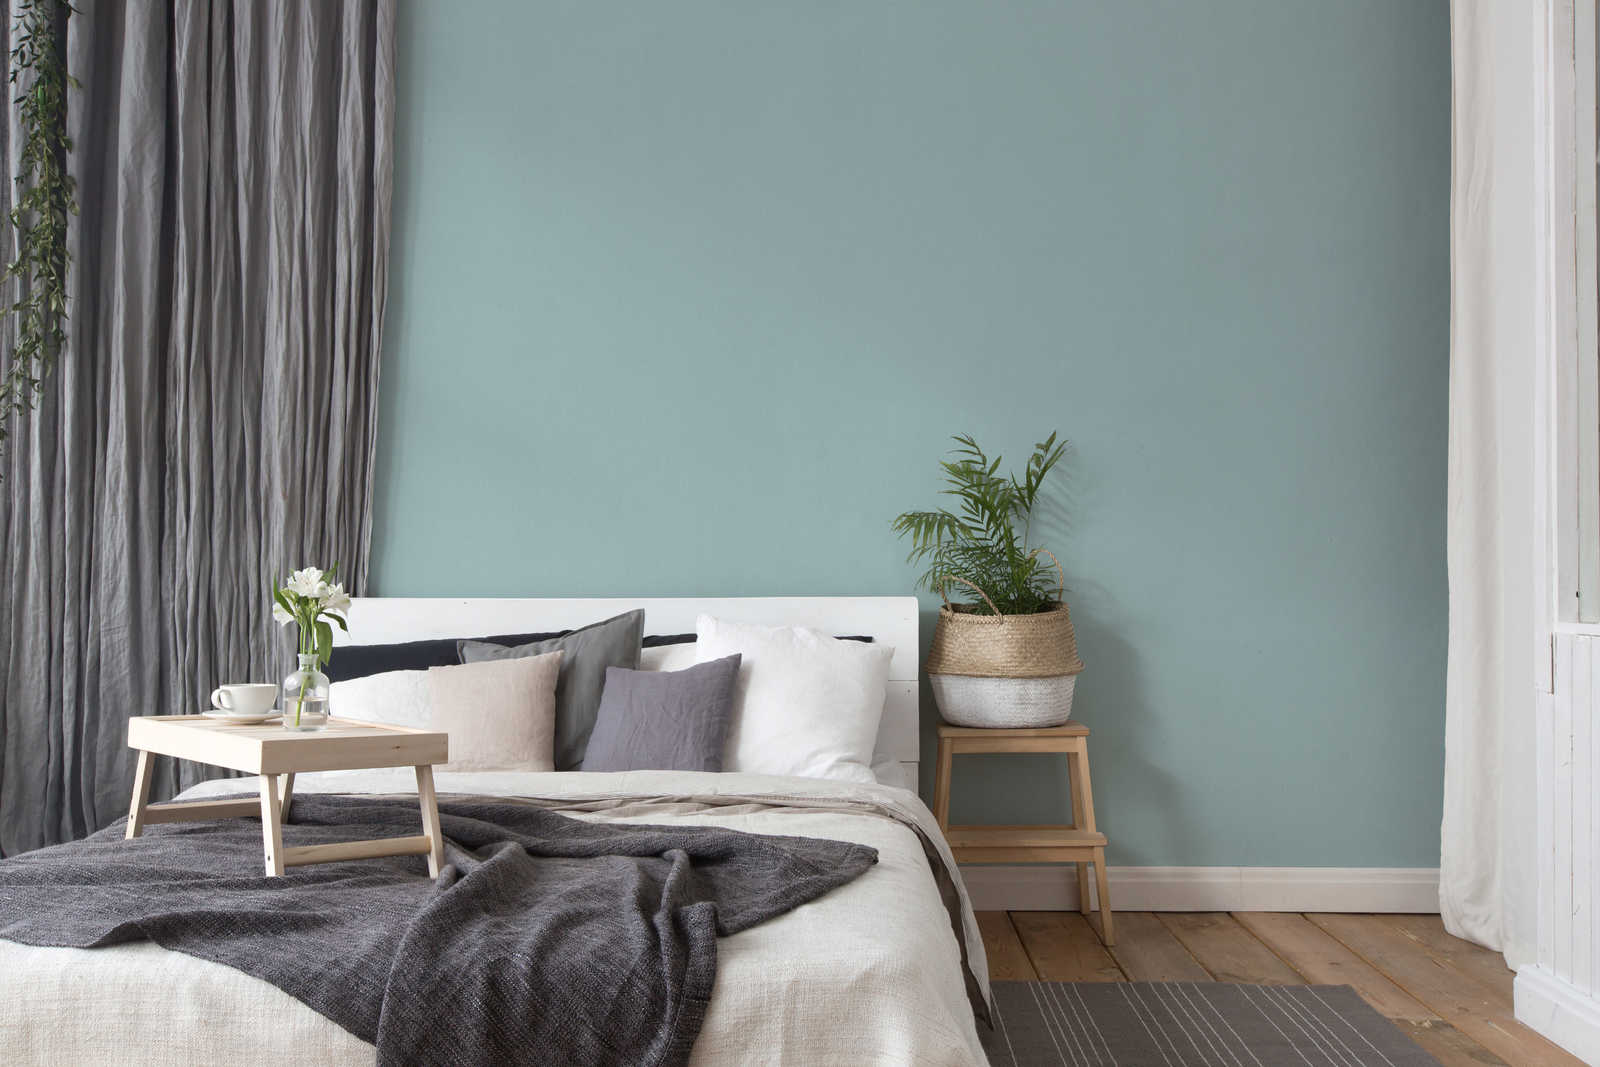             Wallpaper sage green plain & matte with textile texture - green
        